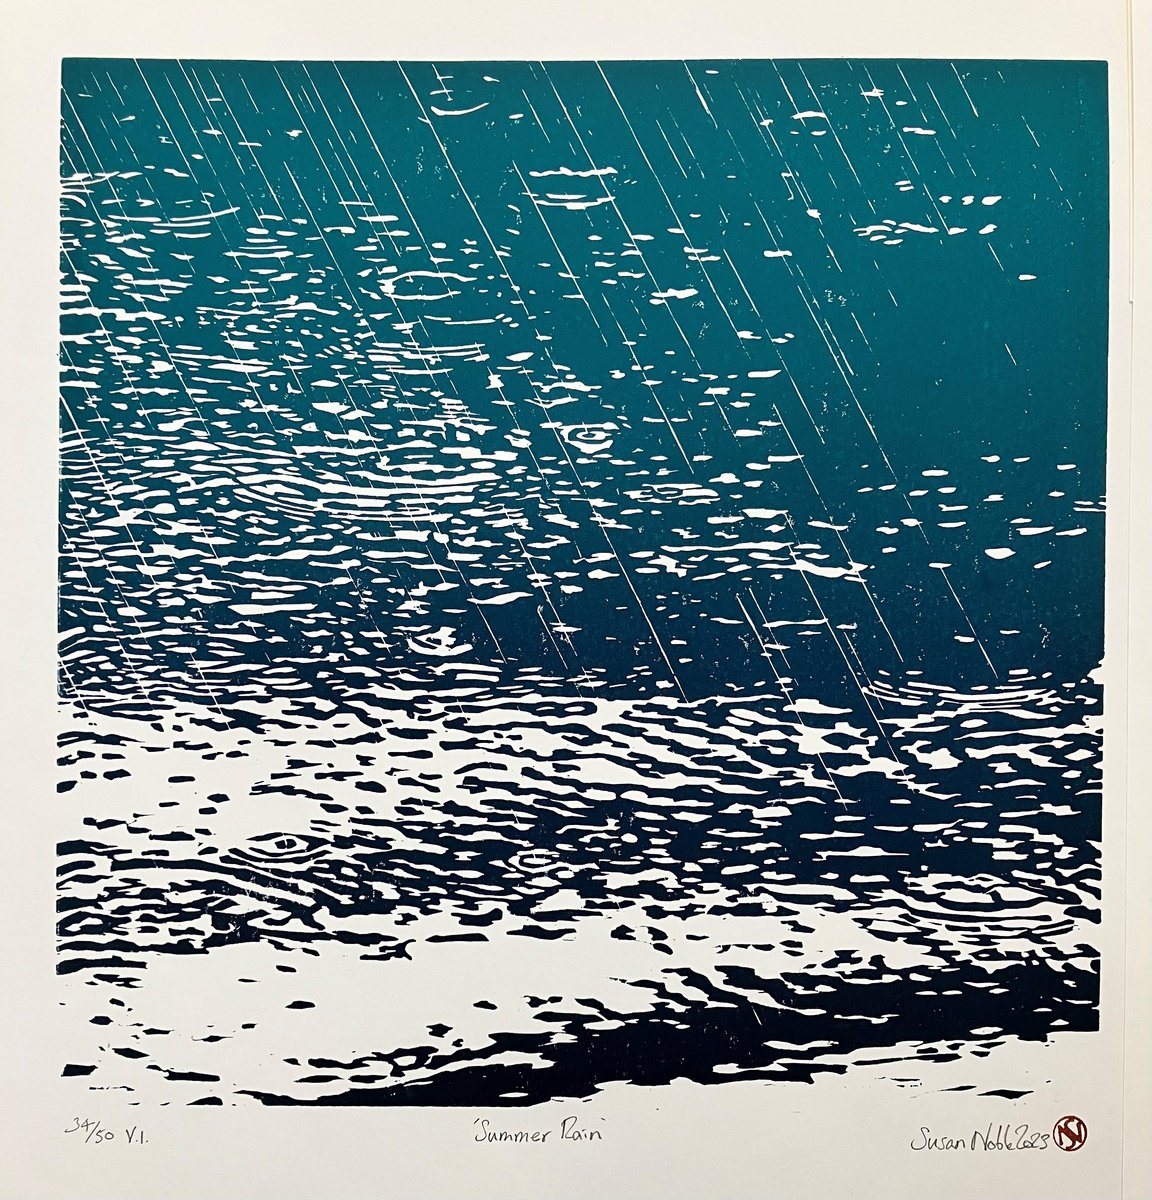 Summer Rain (version 1) by Susan Noble